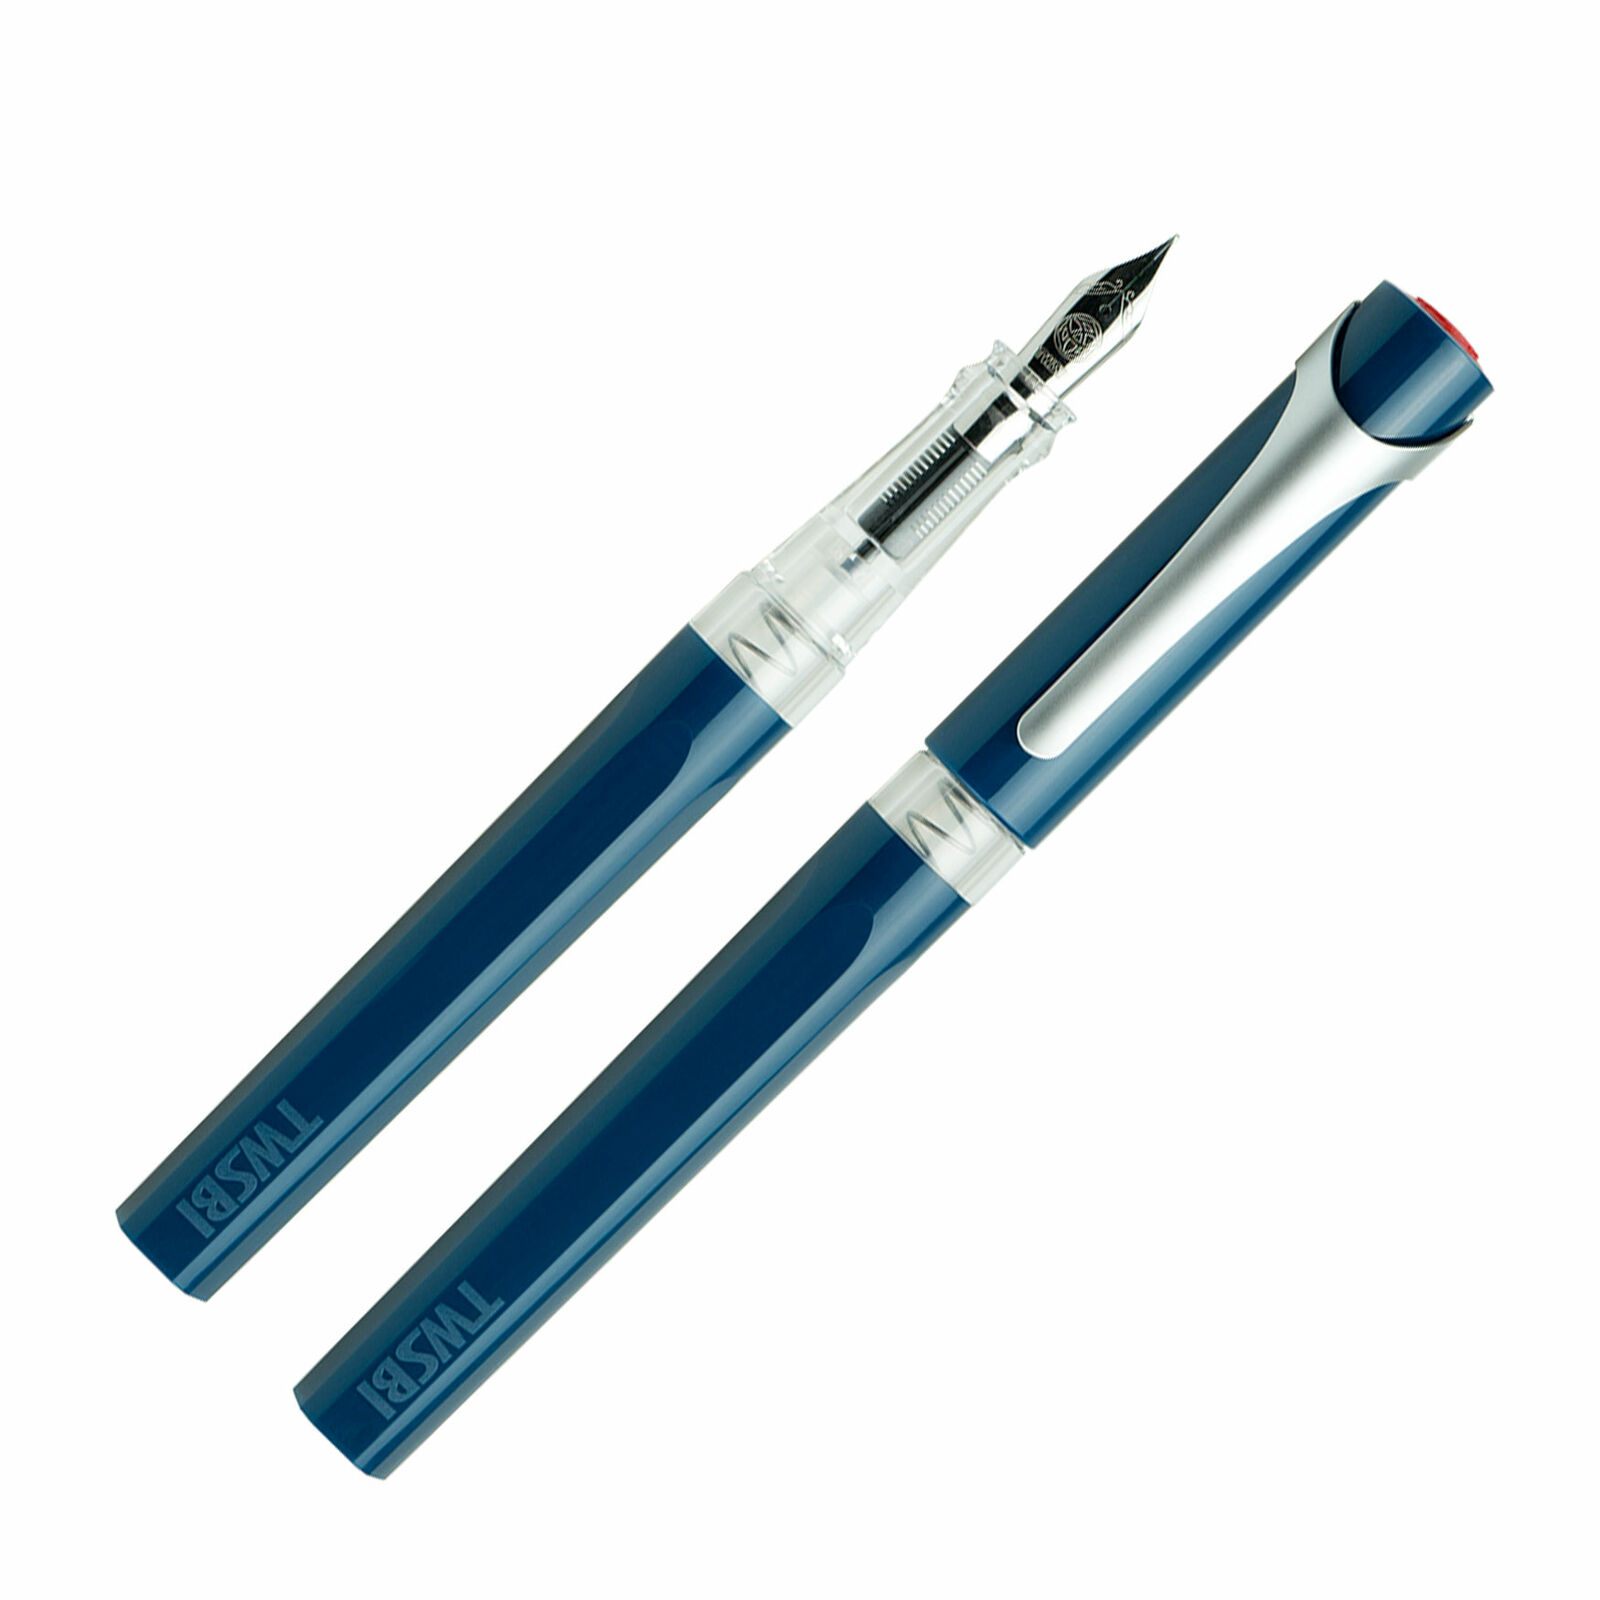 TWSBI Swipe Fountain Pen in Prussian Blue - 1.1mm Stub Nib - NEW in Original Box